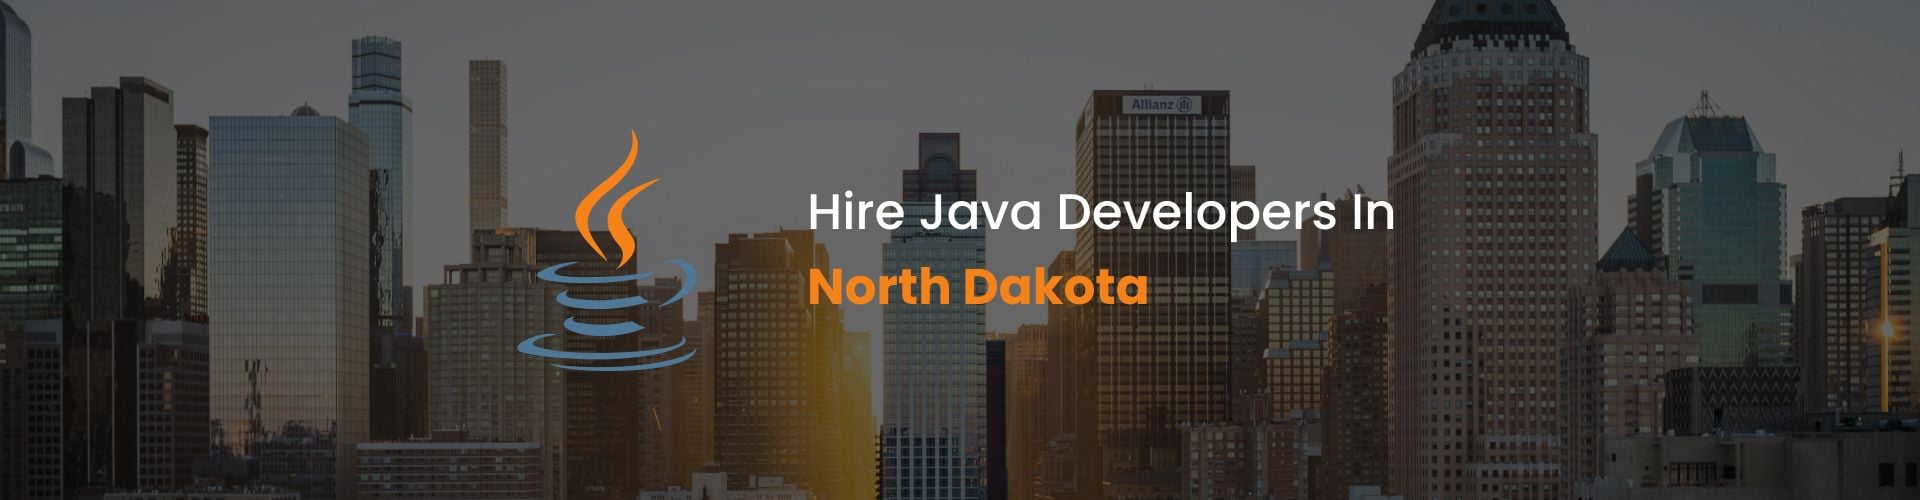 hire java developers in north dakota